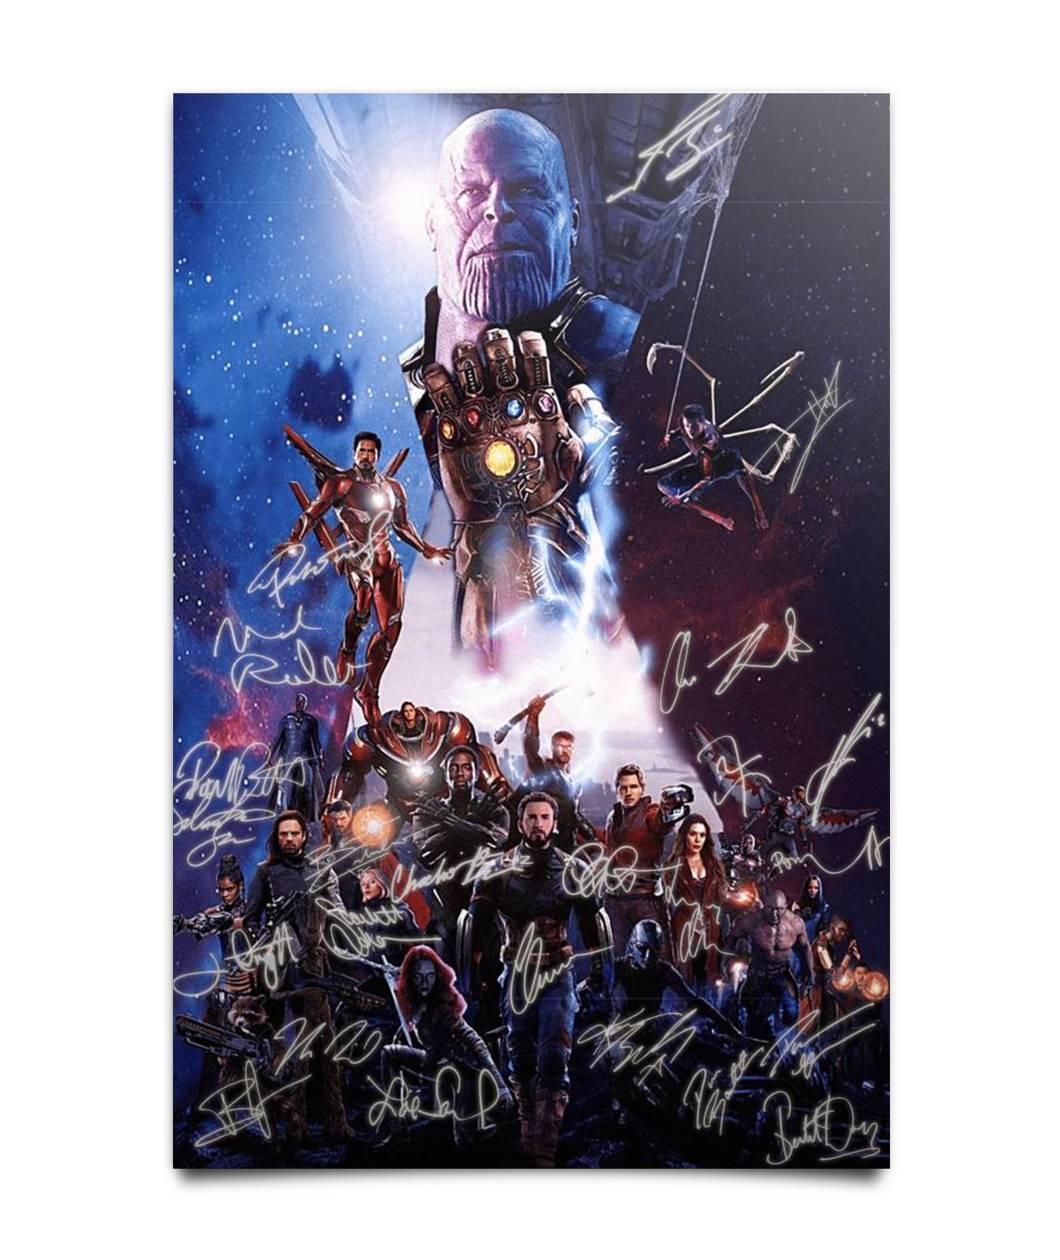 Avenger Endgame Poster Actors Signed Poster Canvas